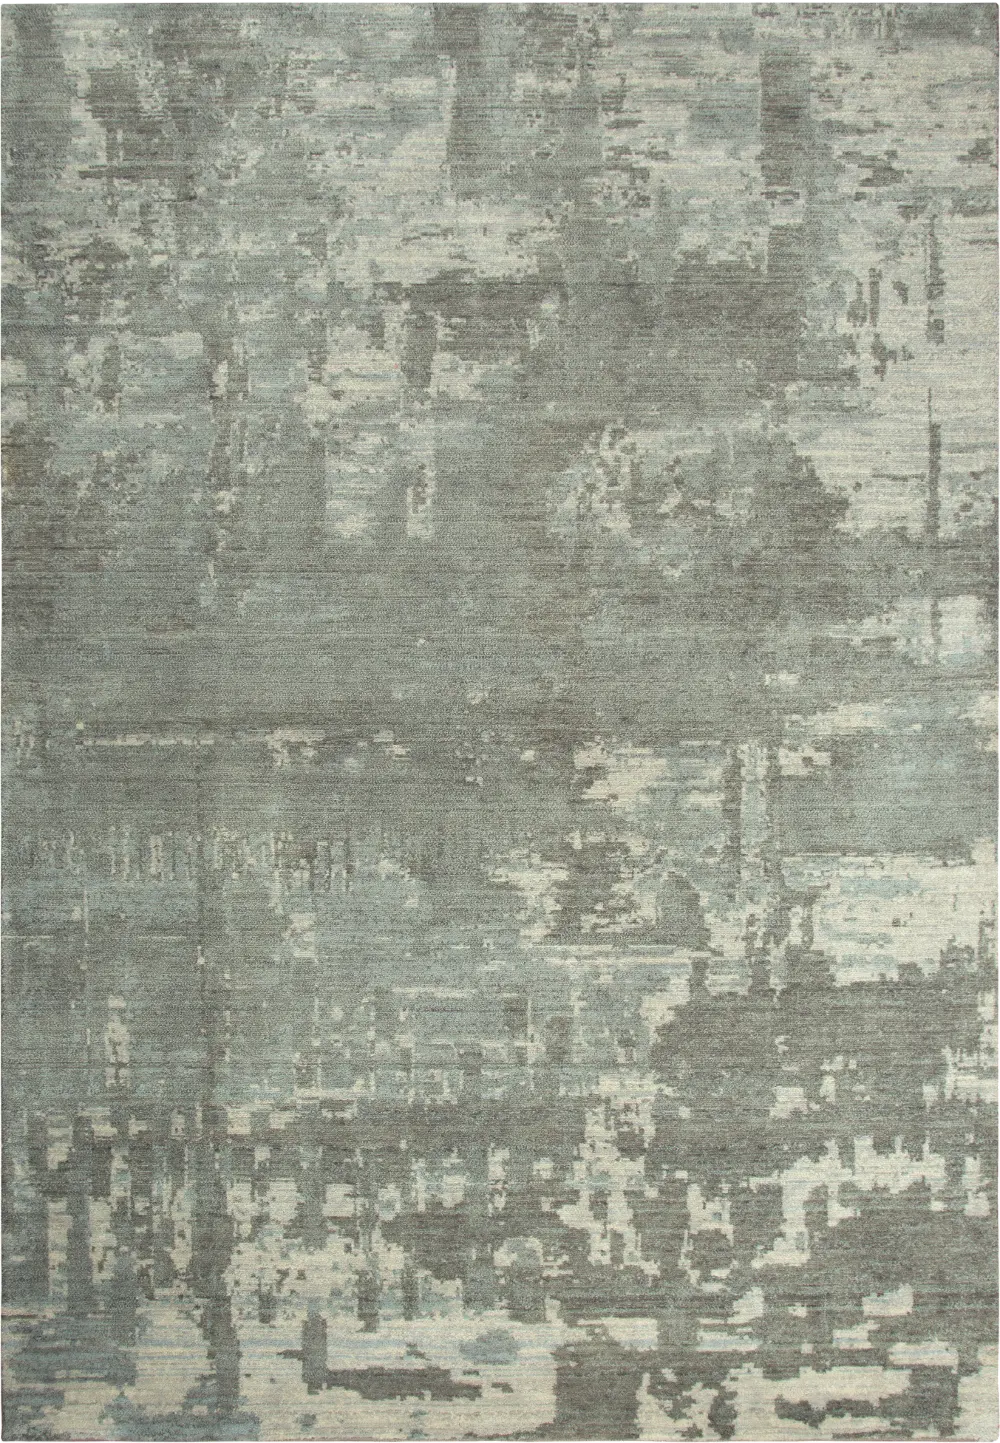 5 x 8 Medium Traditional Gray and Beige Area Rug - Gossamer-1